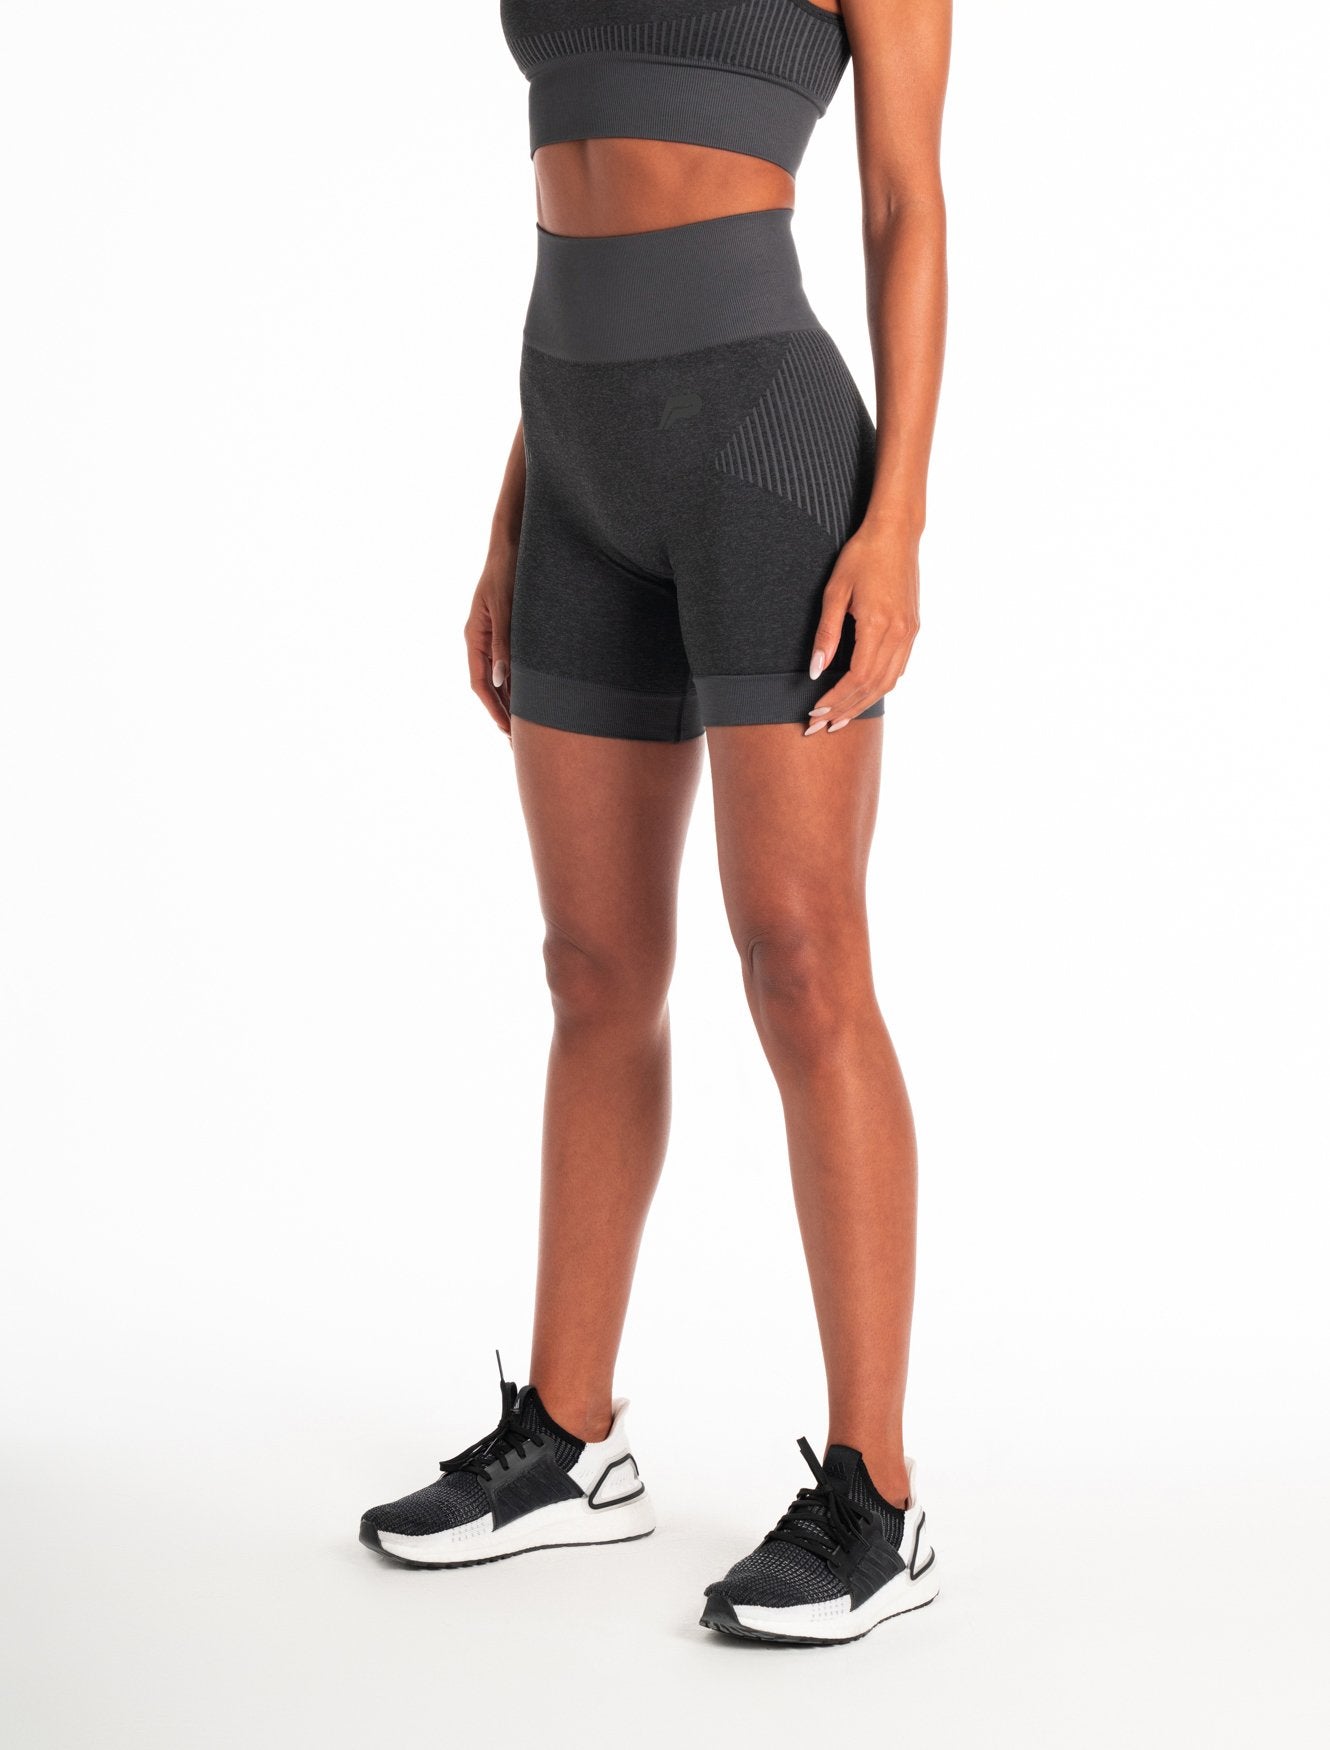 ADAPT Seamless Shorts / Black.Charcoal Pursue Fitness 1